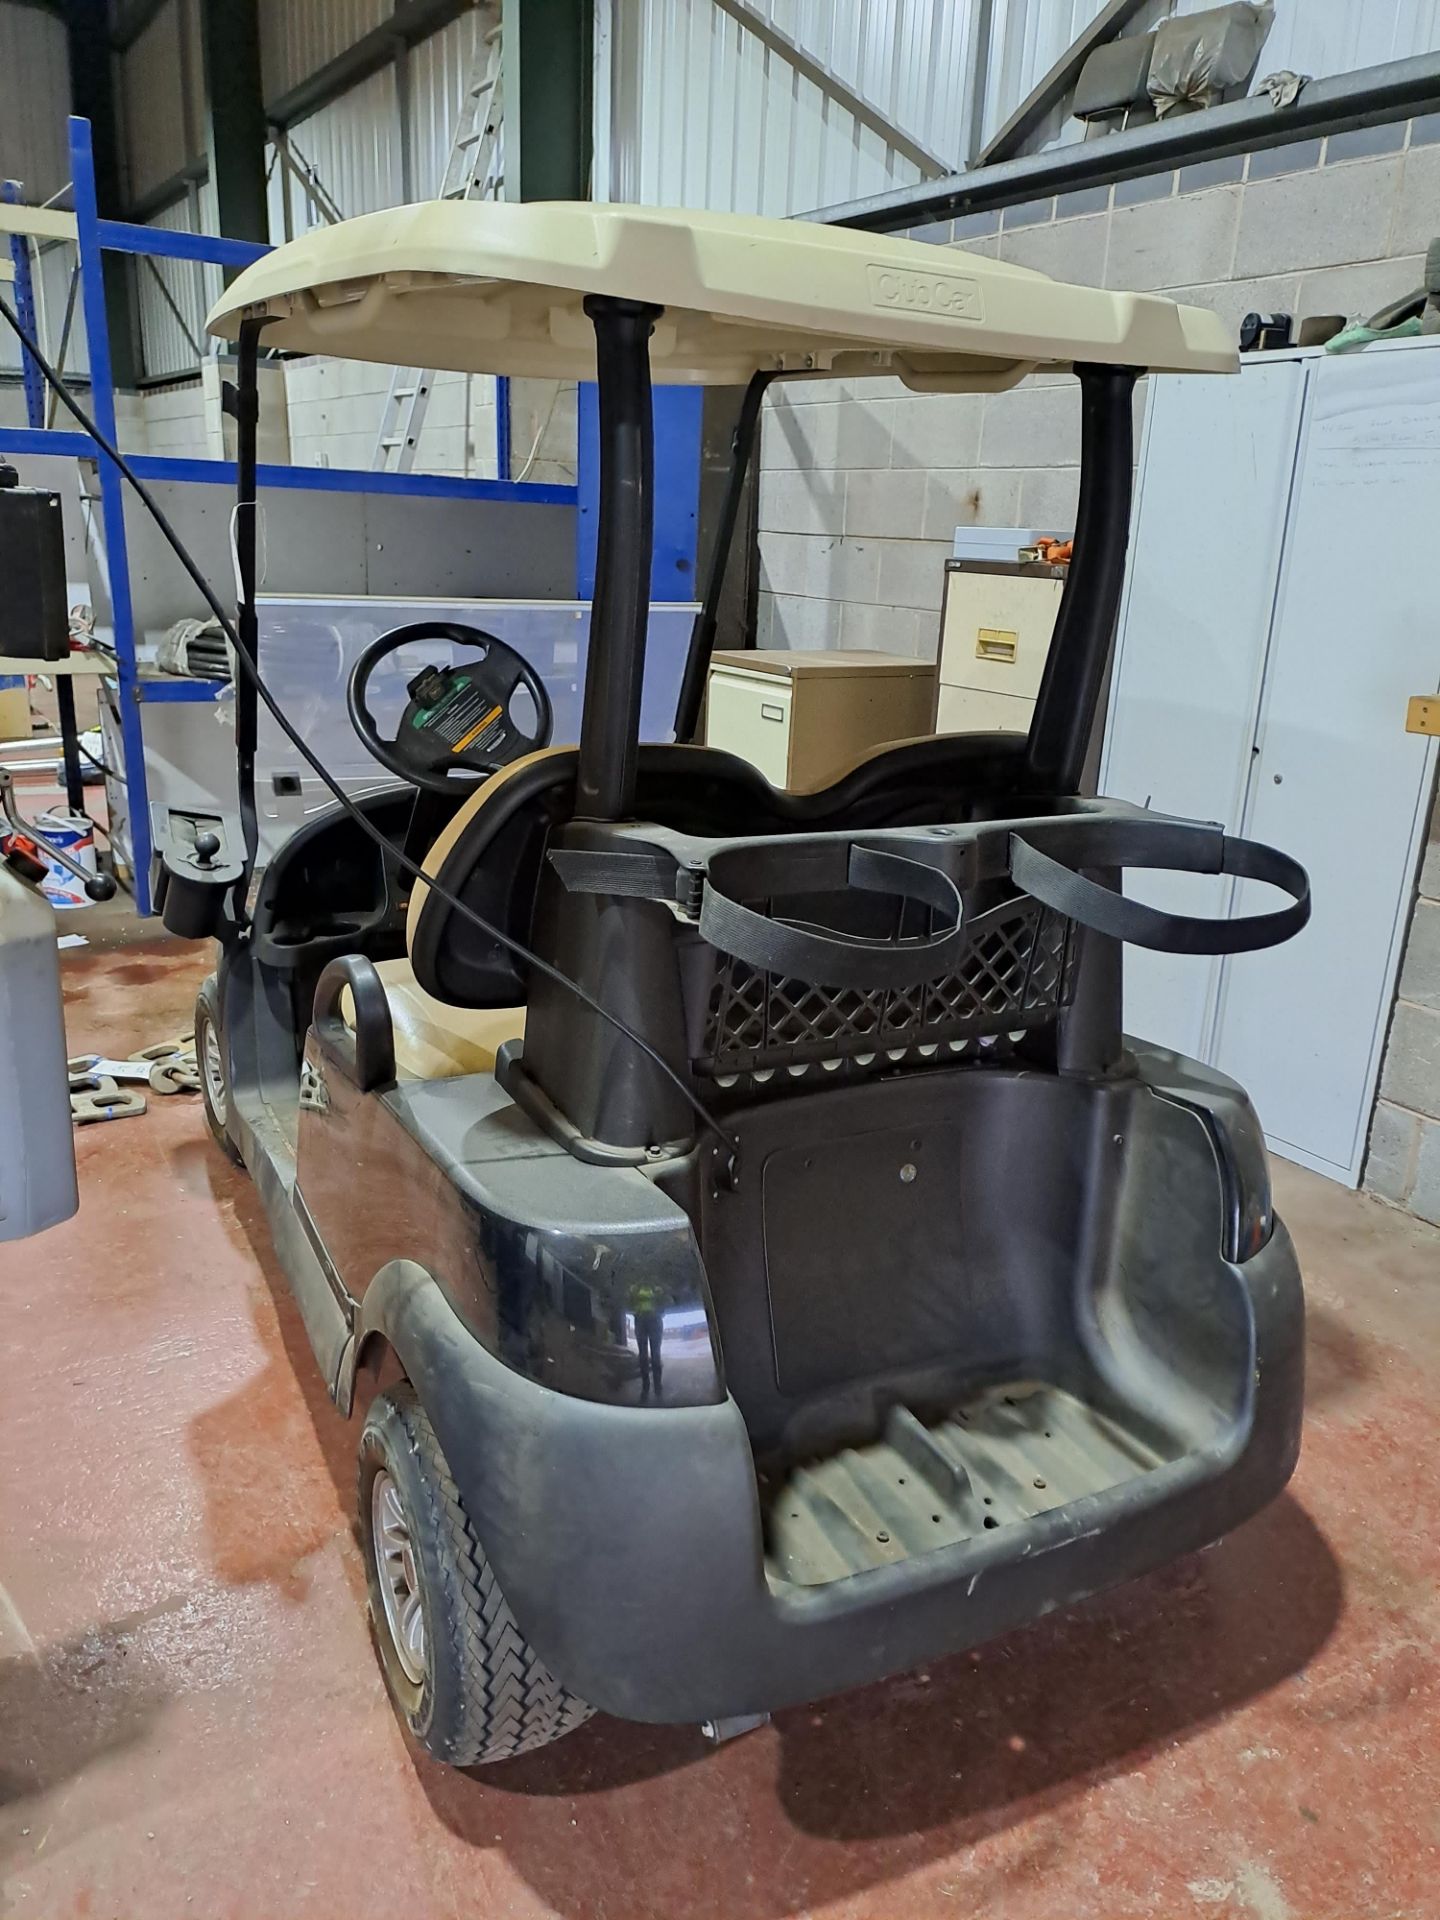 Club Car Precedent electric golf buggy, serial no. JE1722-727415 - Image 4 of 6